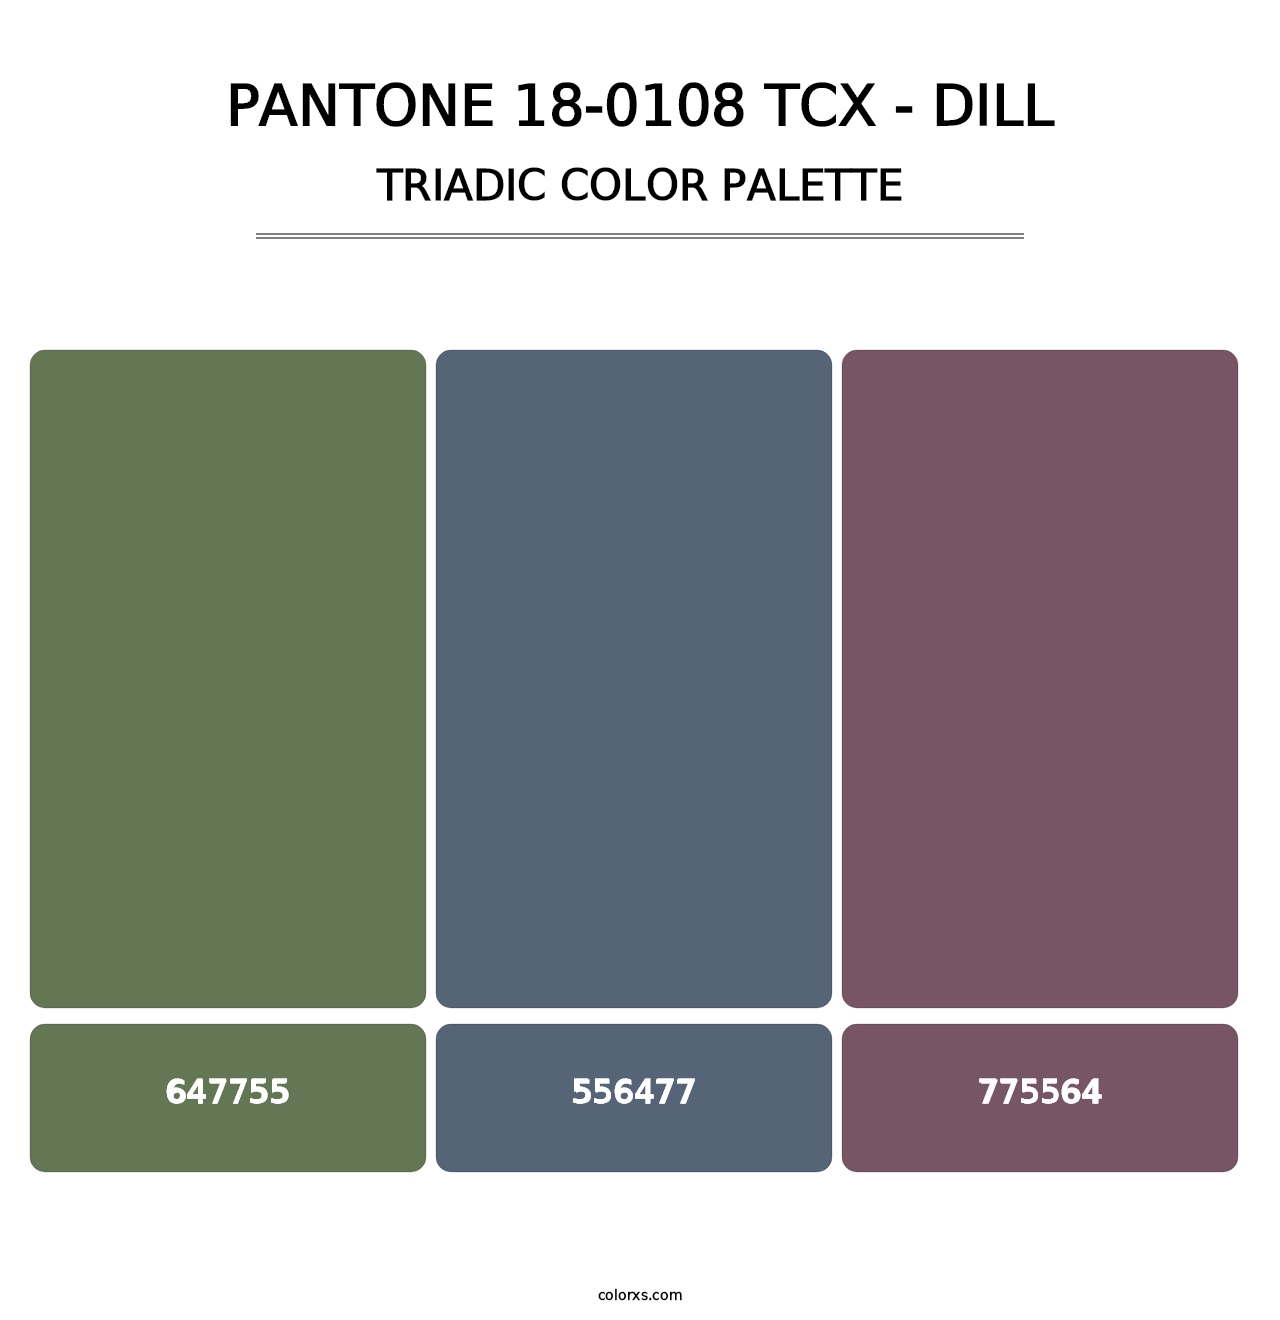 PANTONE 18-0108 TCX - Dill - Triadic Color Palette